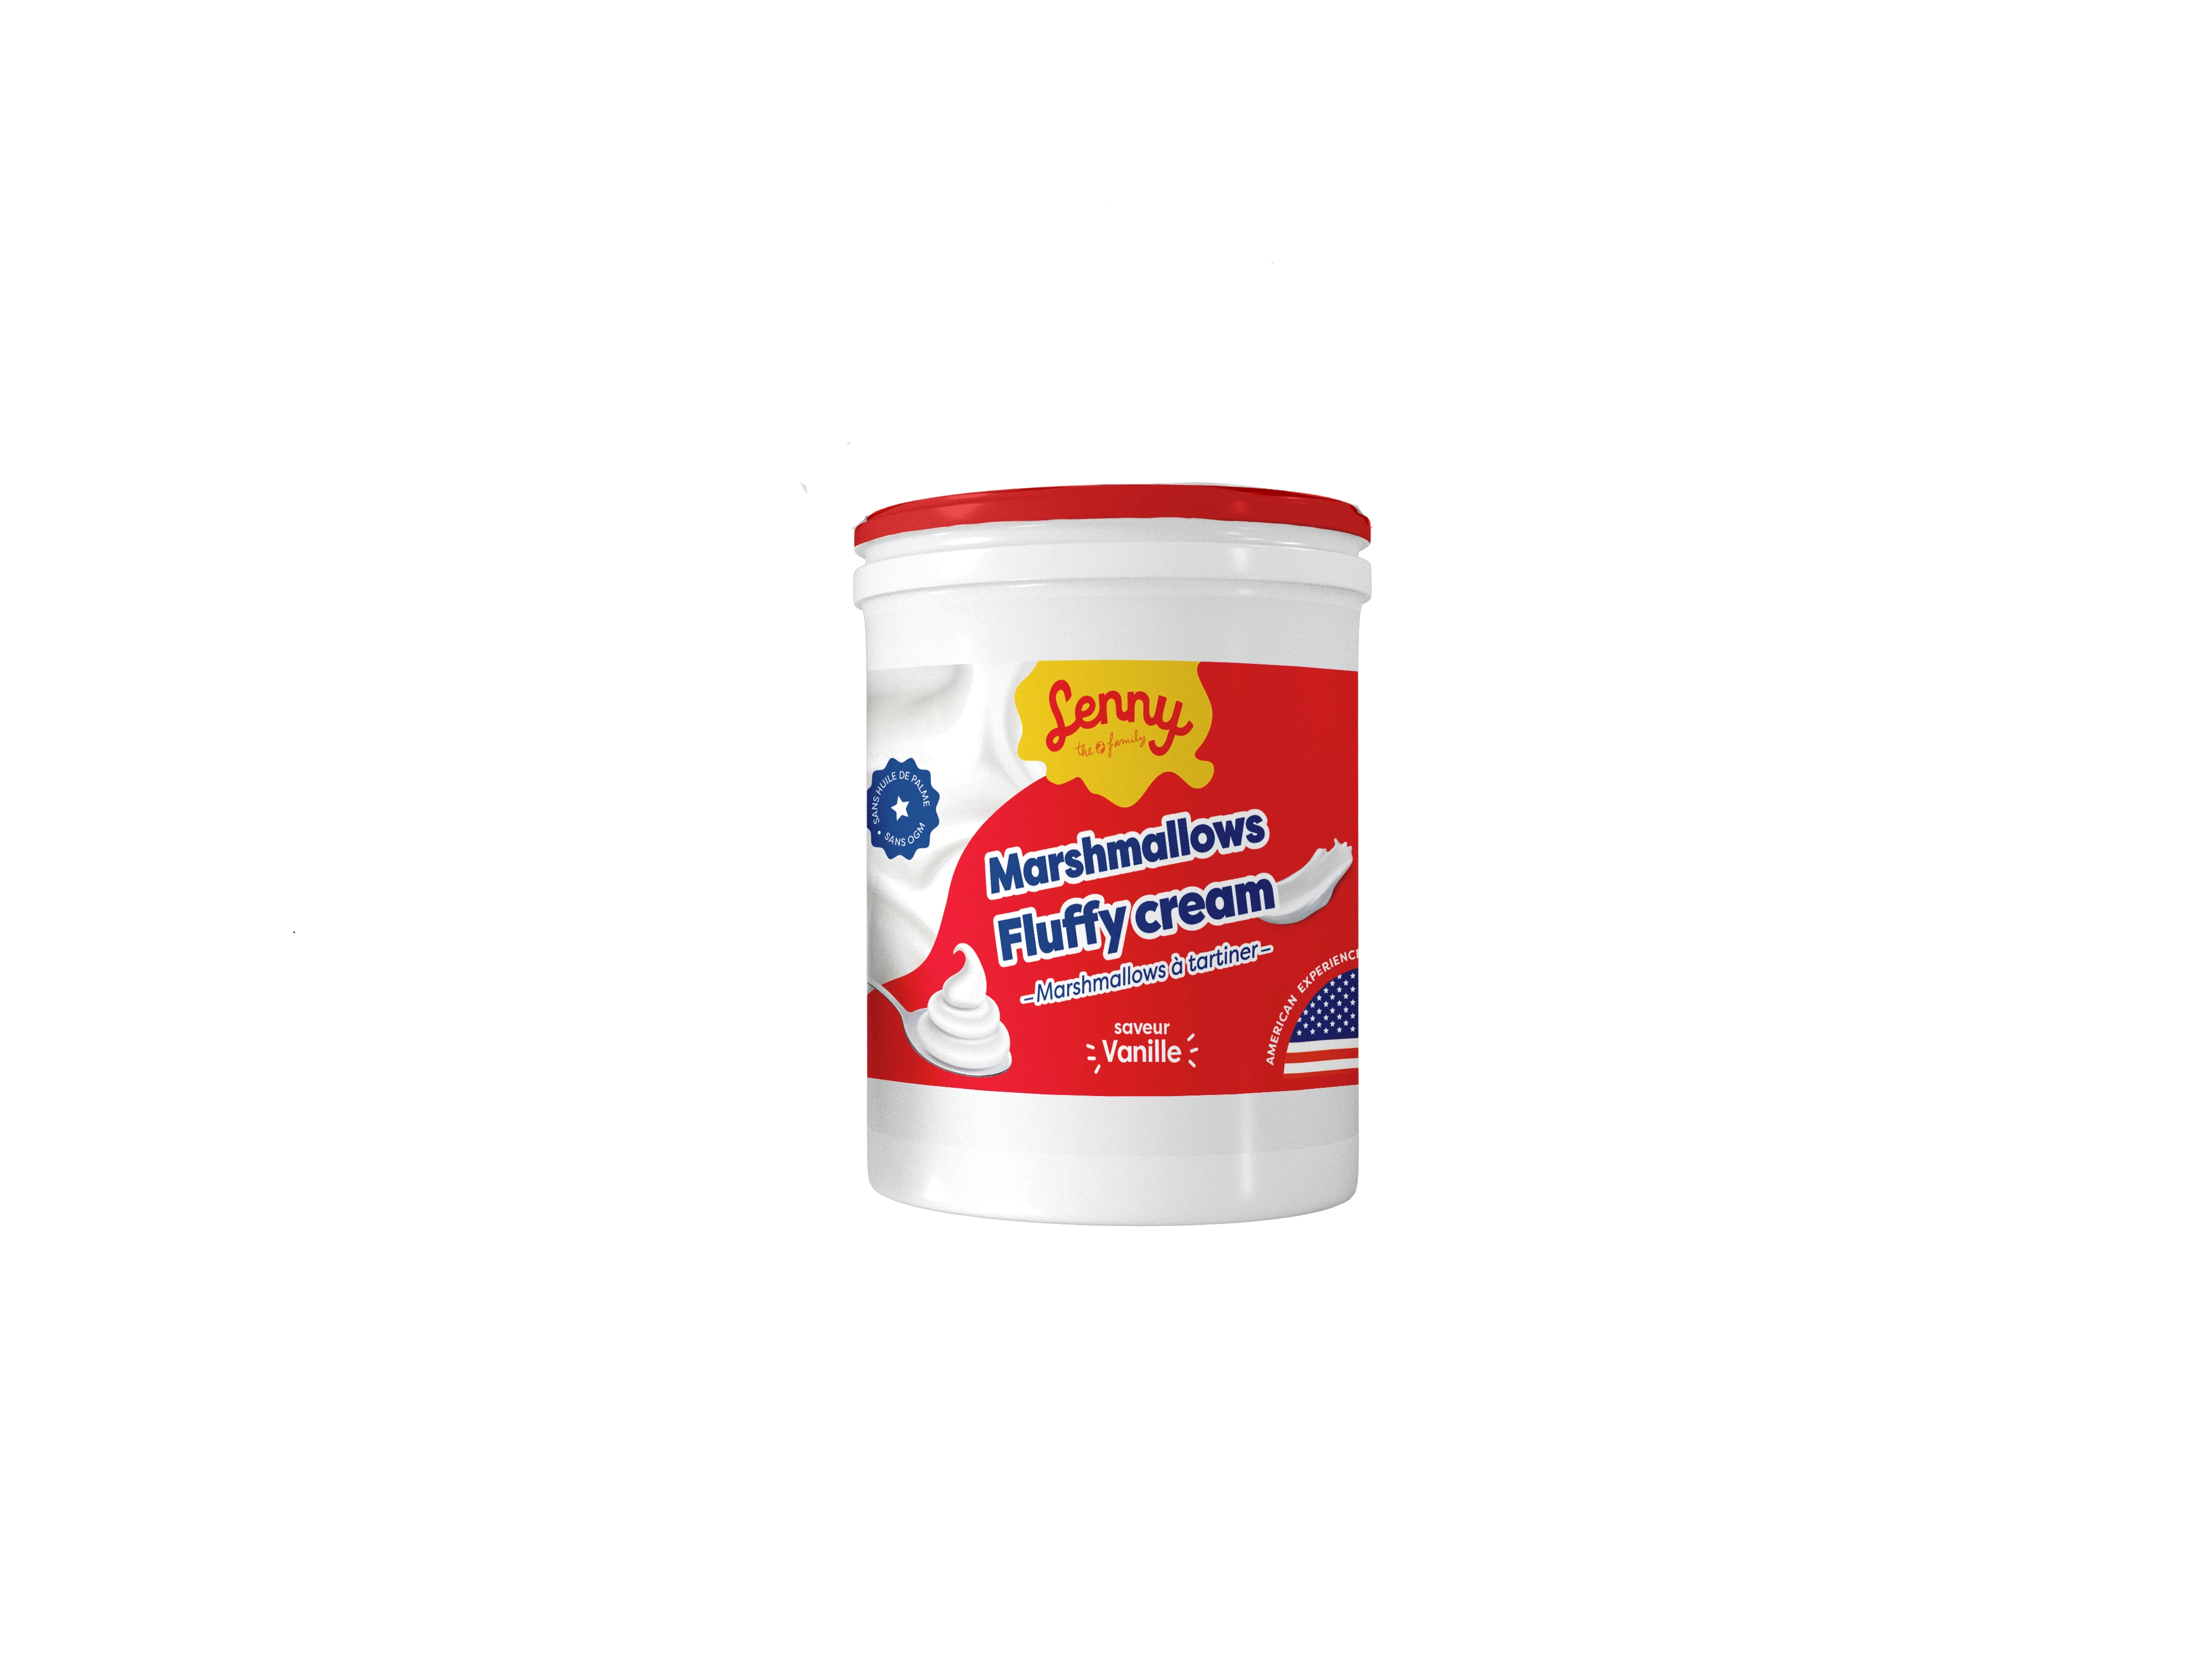 Marshmallow Creme Baunilha,12x180g - LENNY